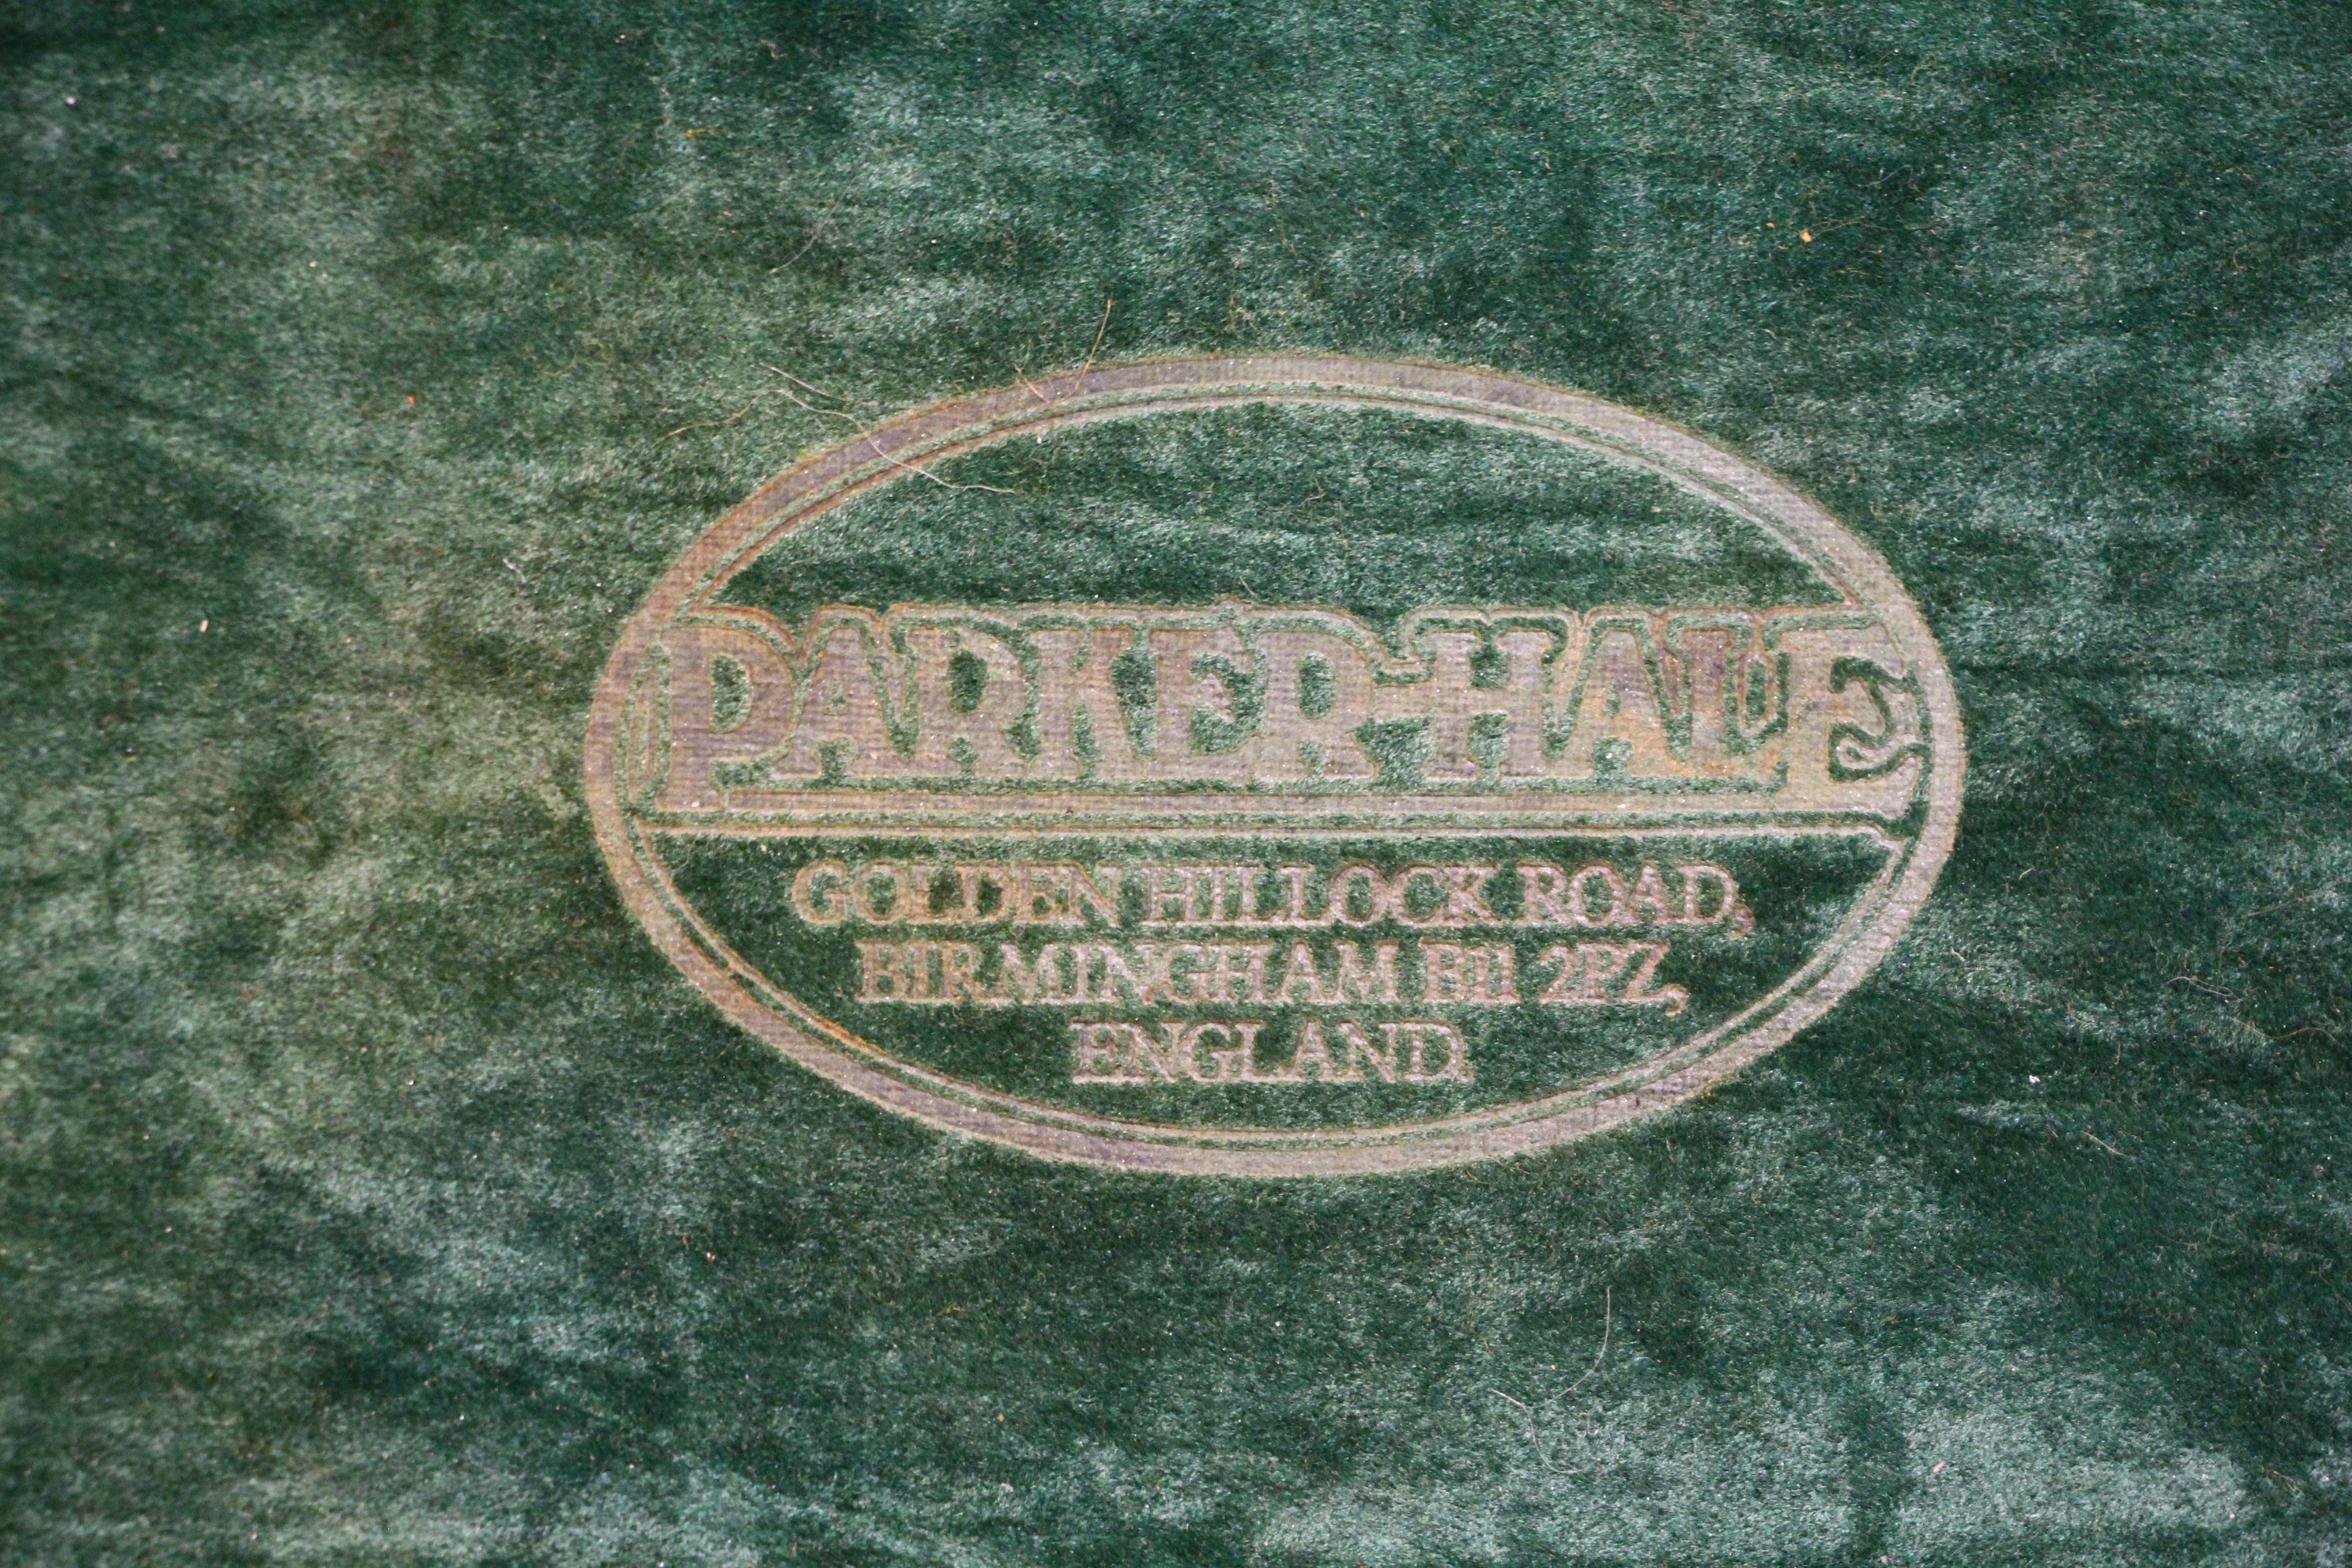 A PARKER HALE 12G GUN CLEANING KIT IN HARDWOOD TRANSIT CASE - Image 3 of 6